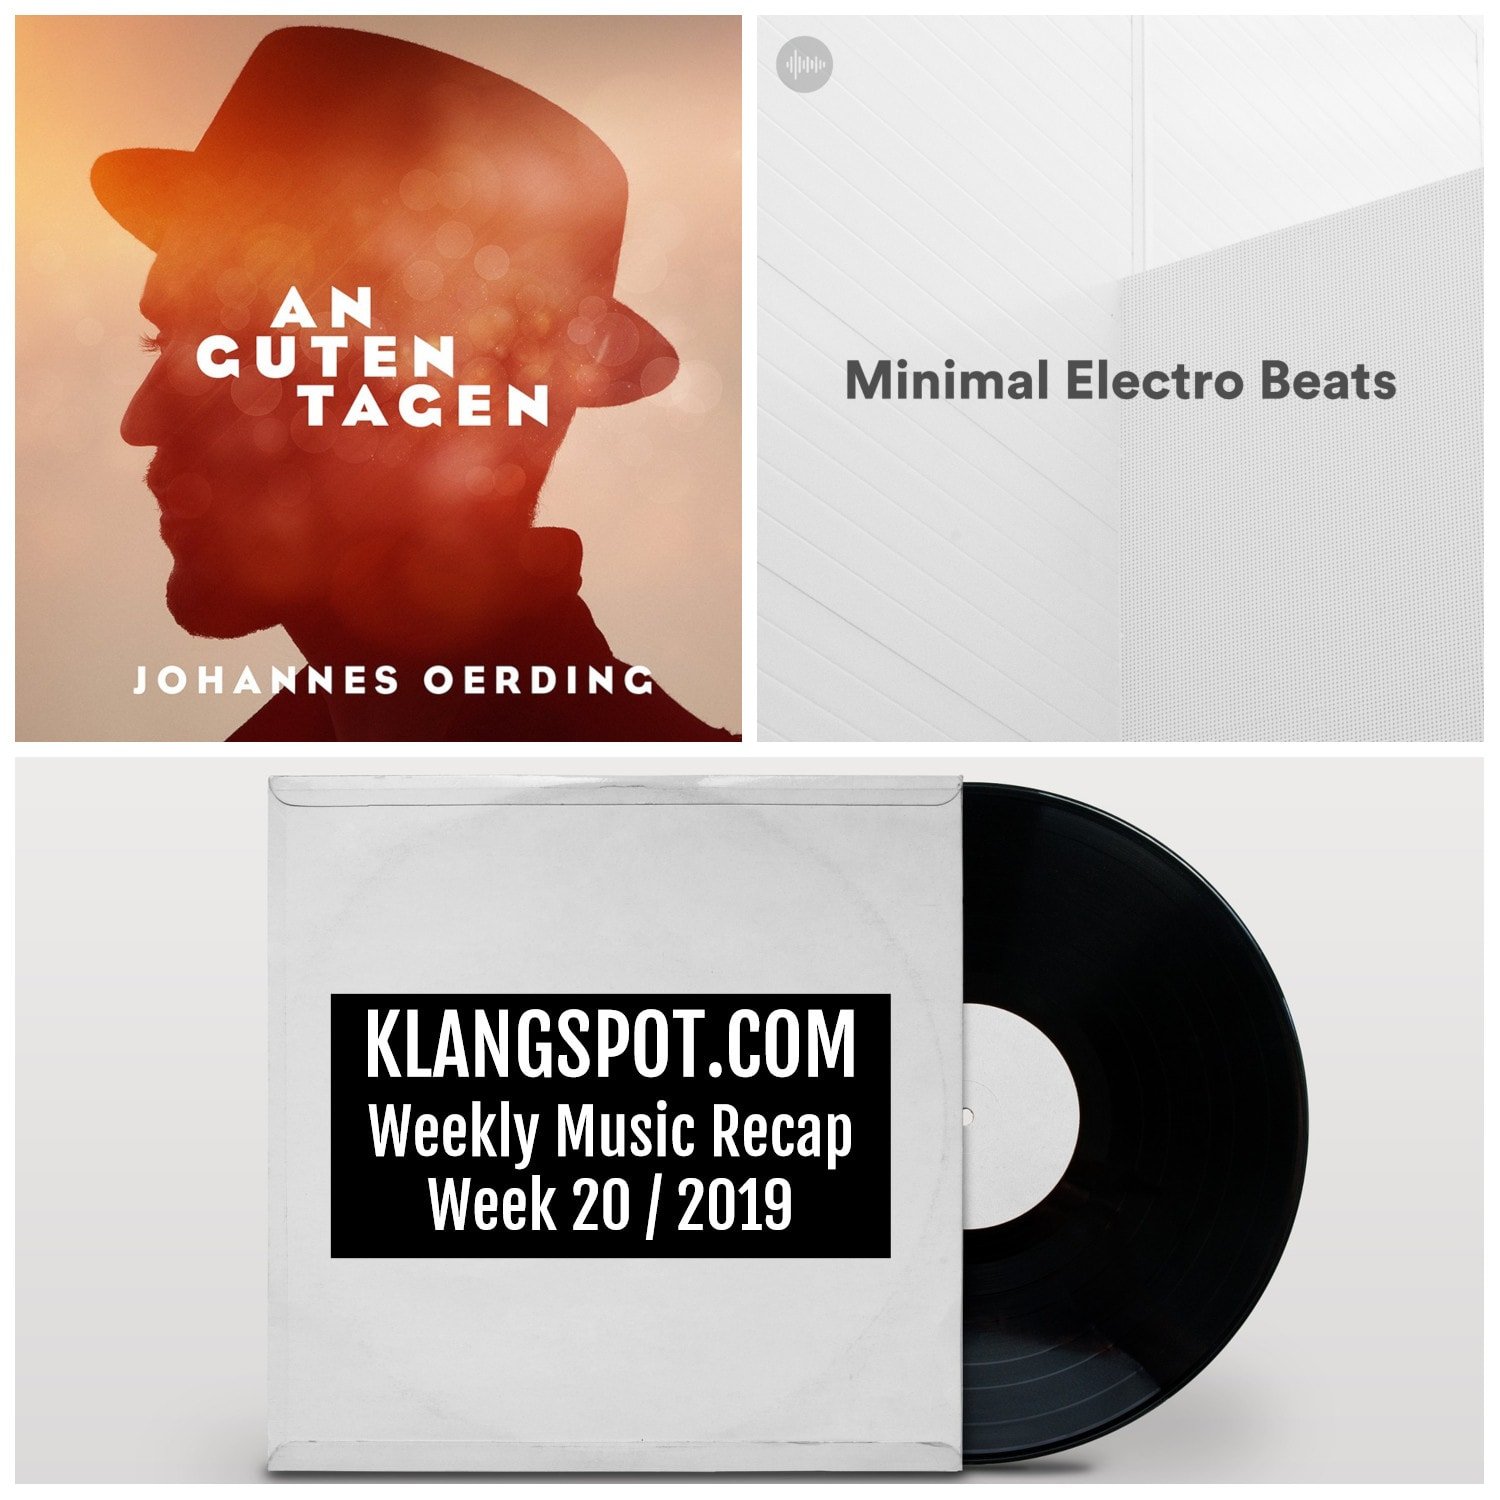 Weekly Music Recap | Week 20/2019: Minimal Electro Beats / Johannes Oerding 'An guten Tagen'